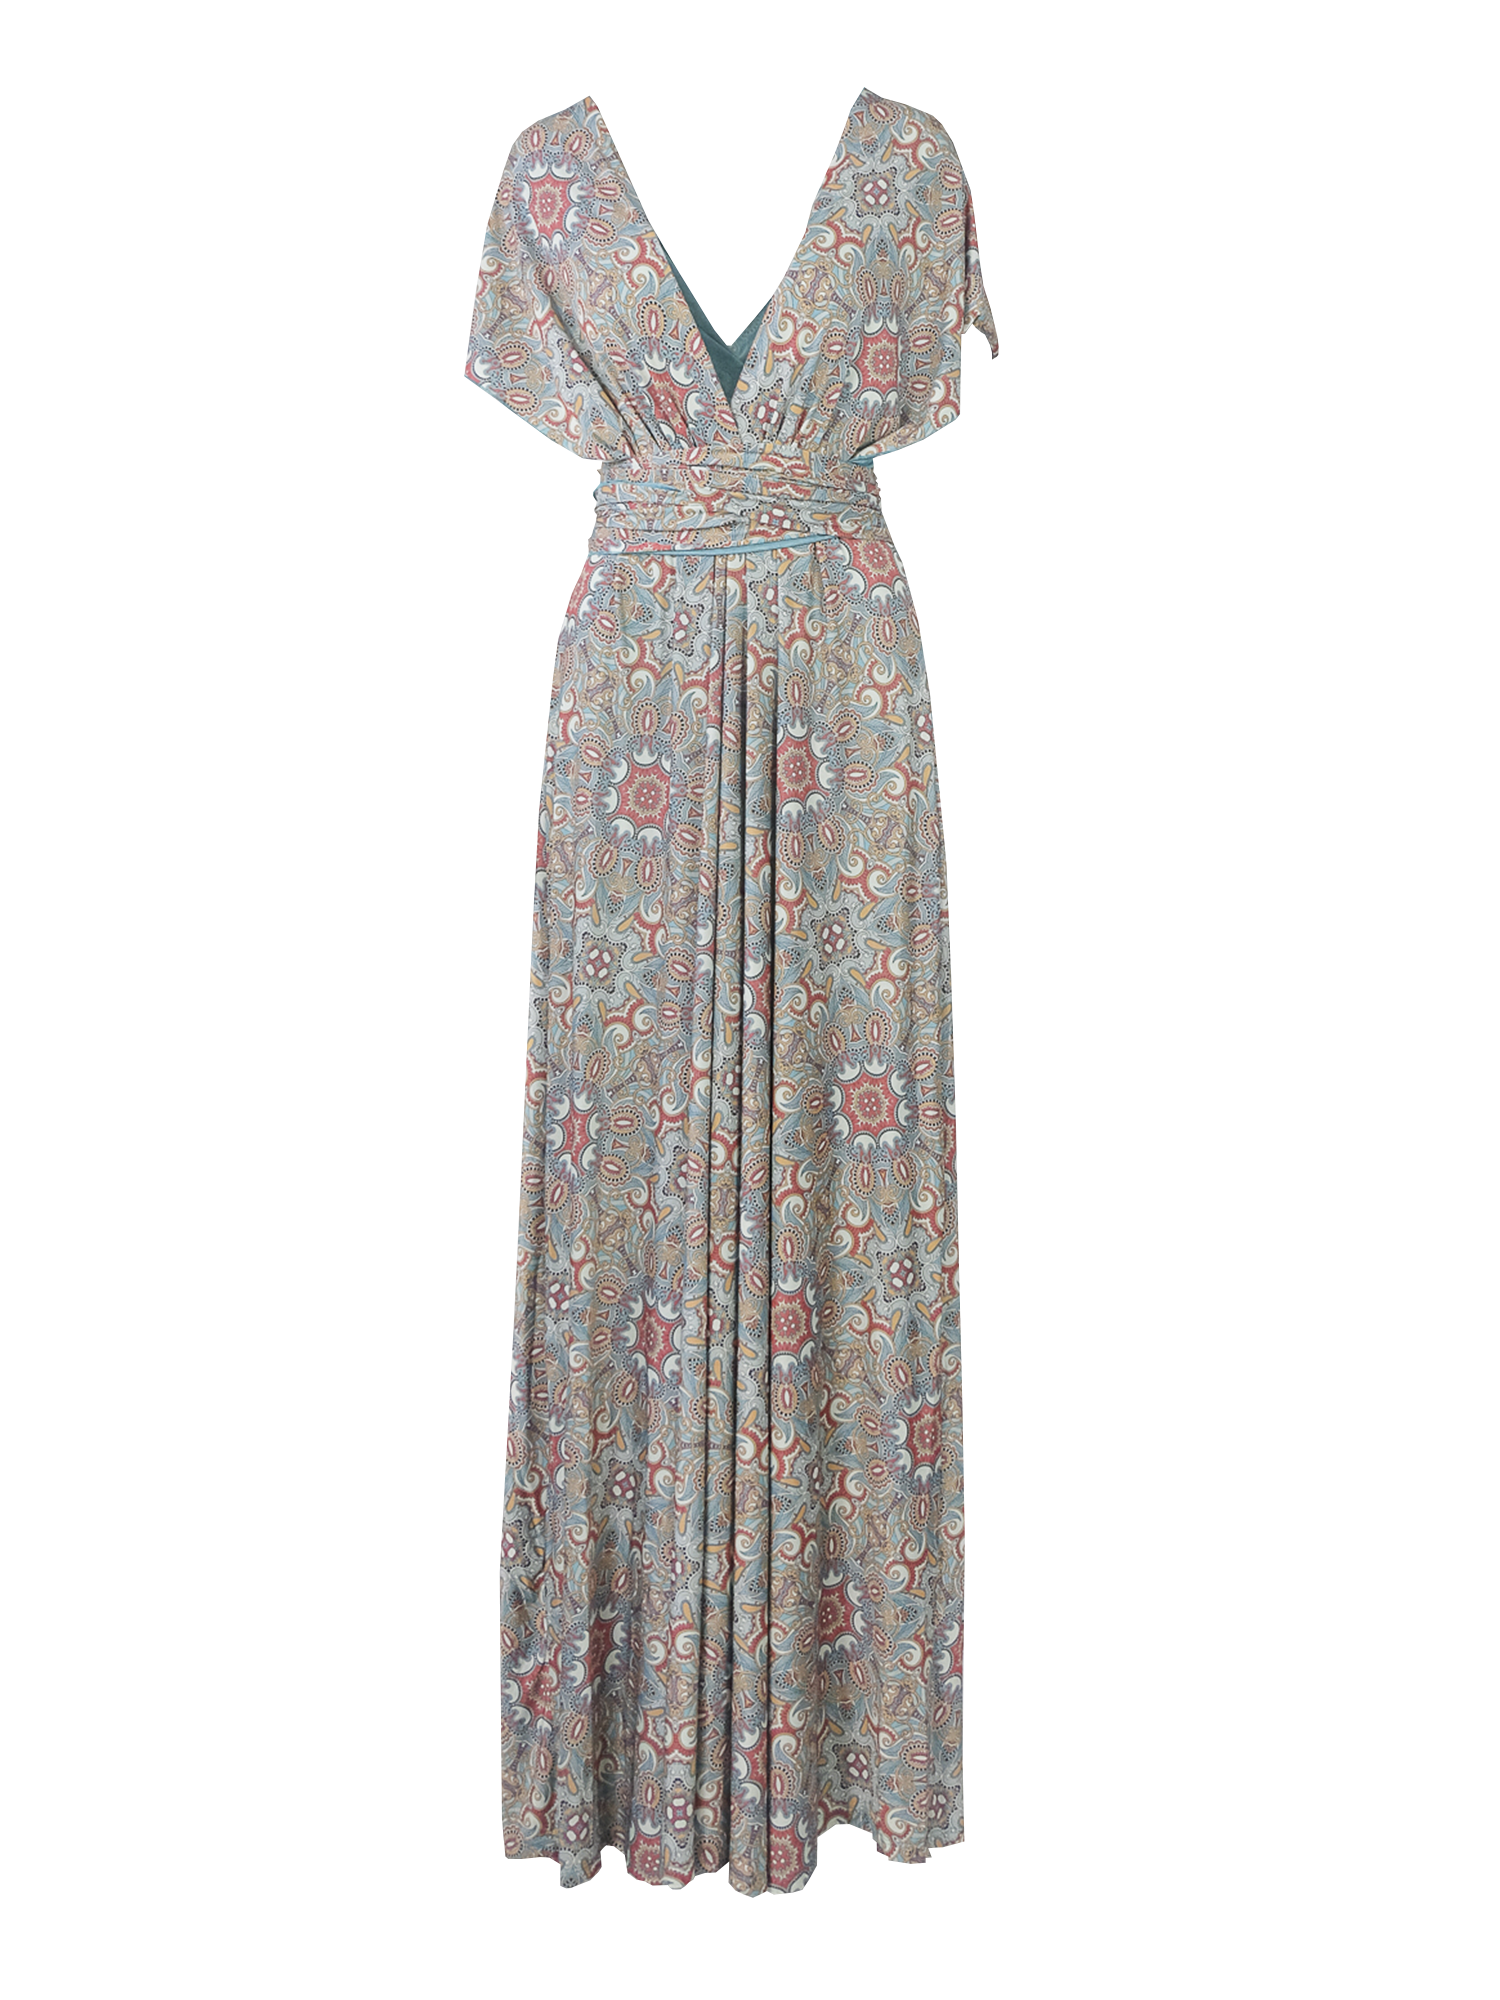 AURORA - long transformer dress in Vietri patterned lycra